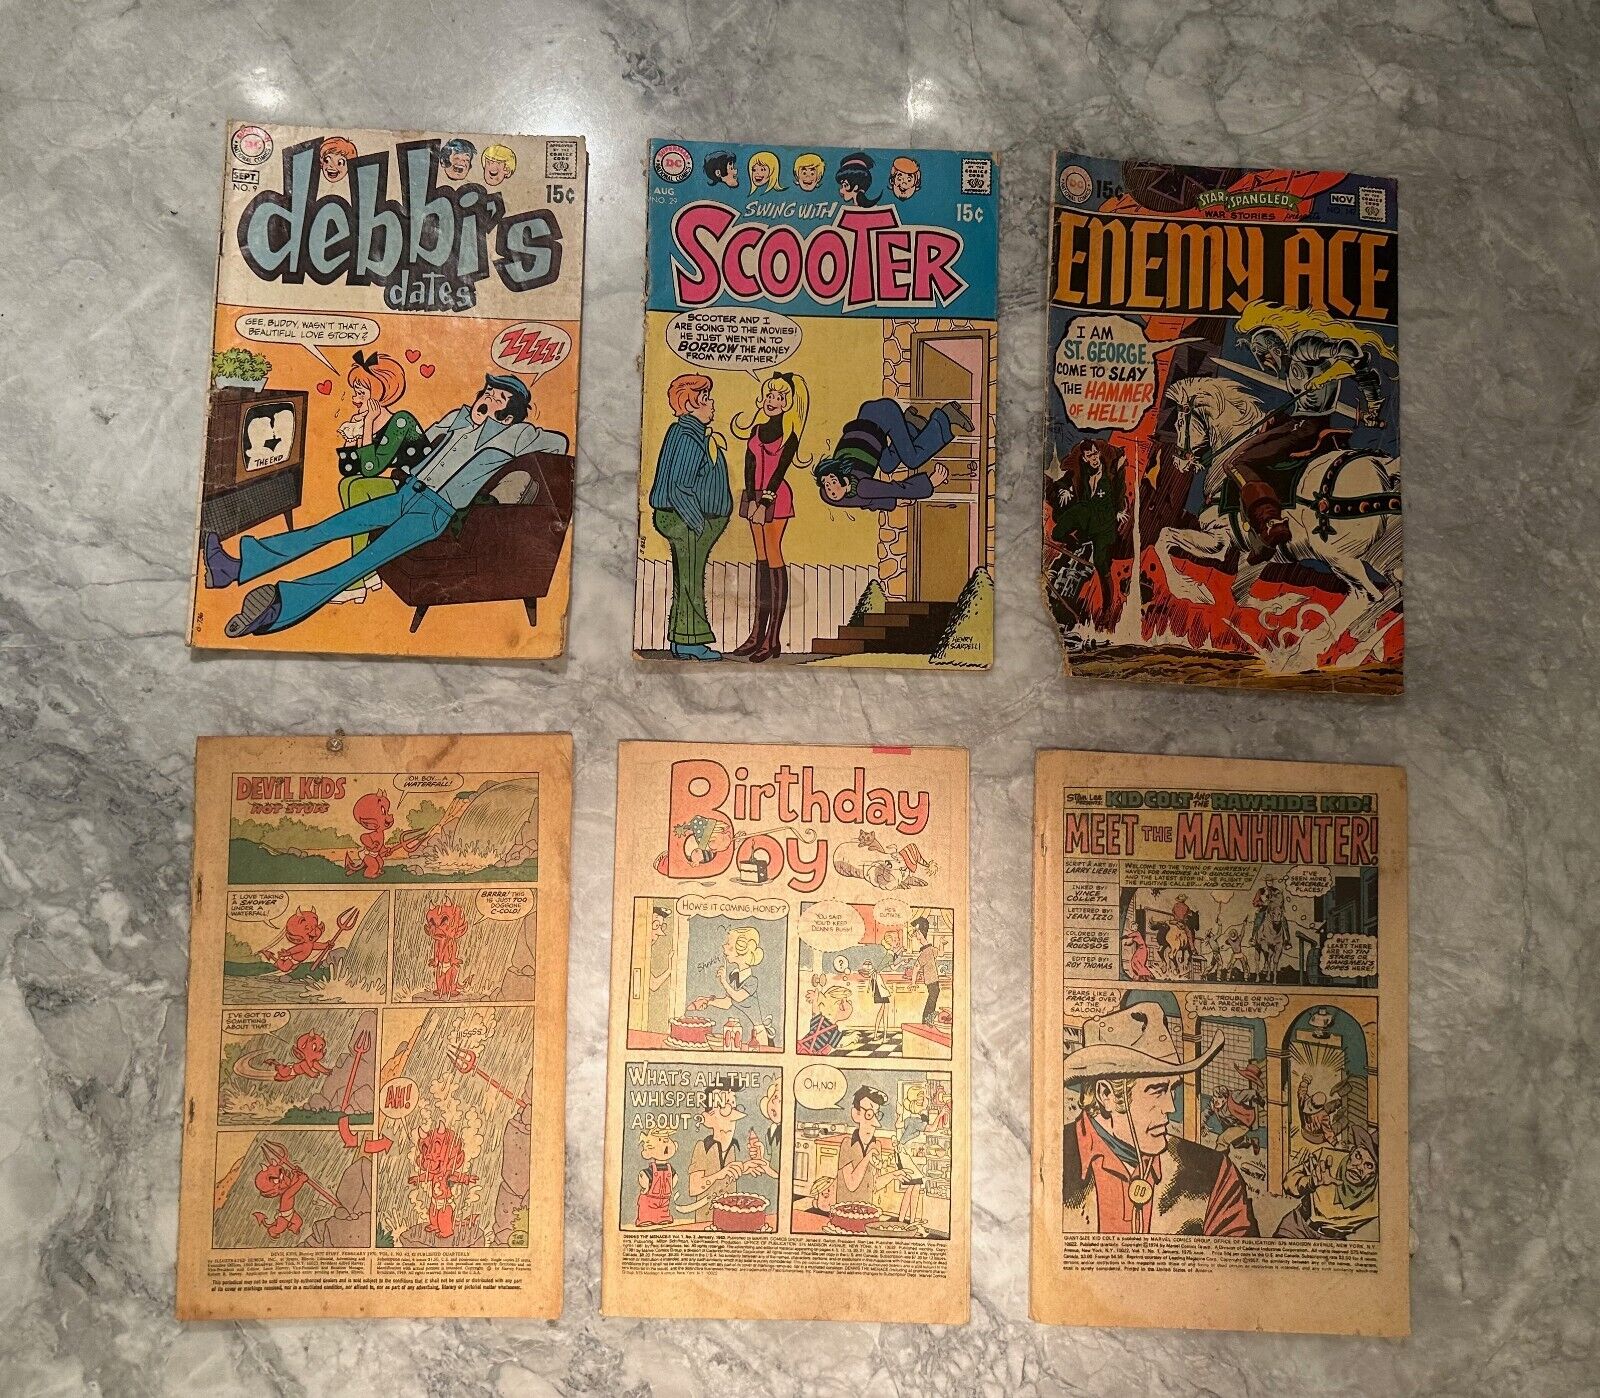 Lot of 6 DC Comics Debbie's Dates Swing w/ Scooter Enemy Ace Dennis the Mennis